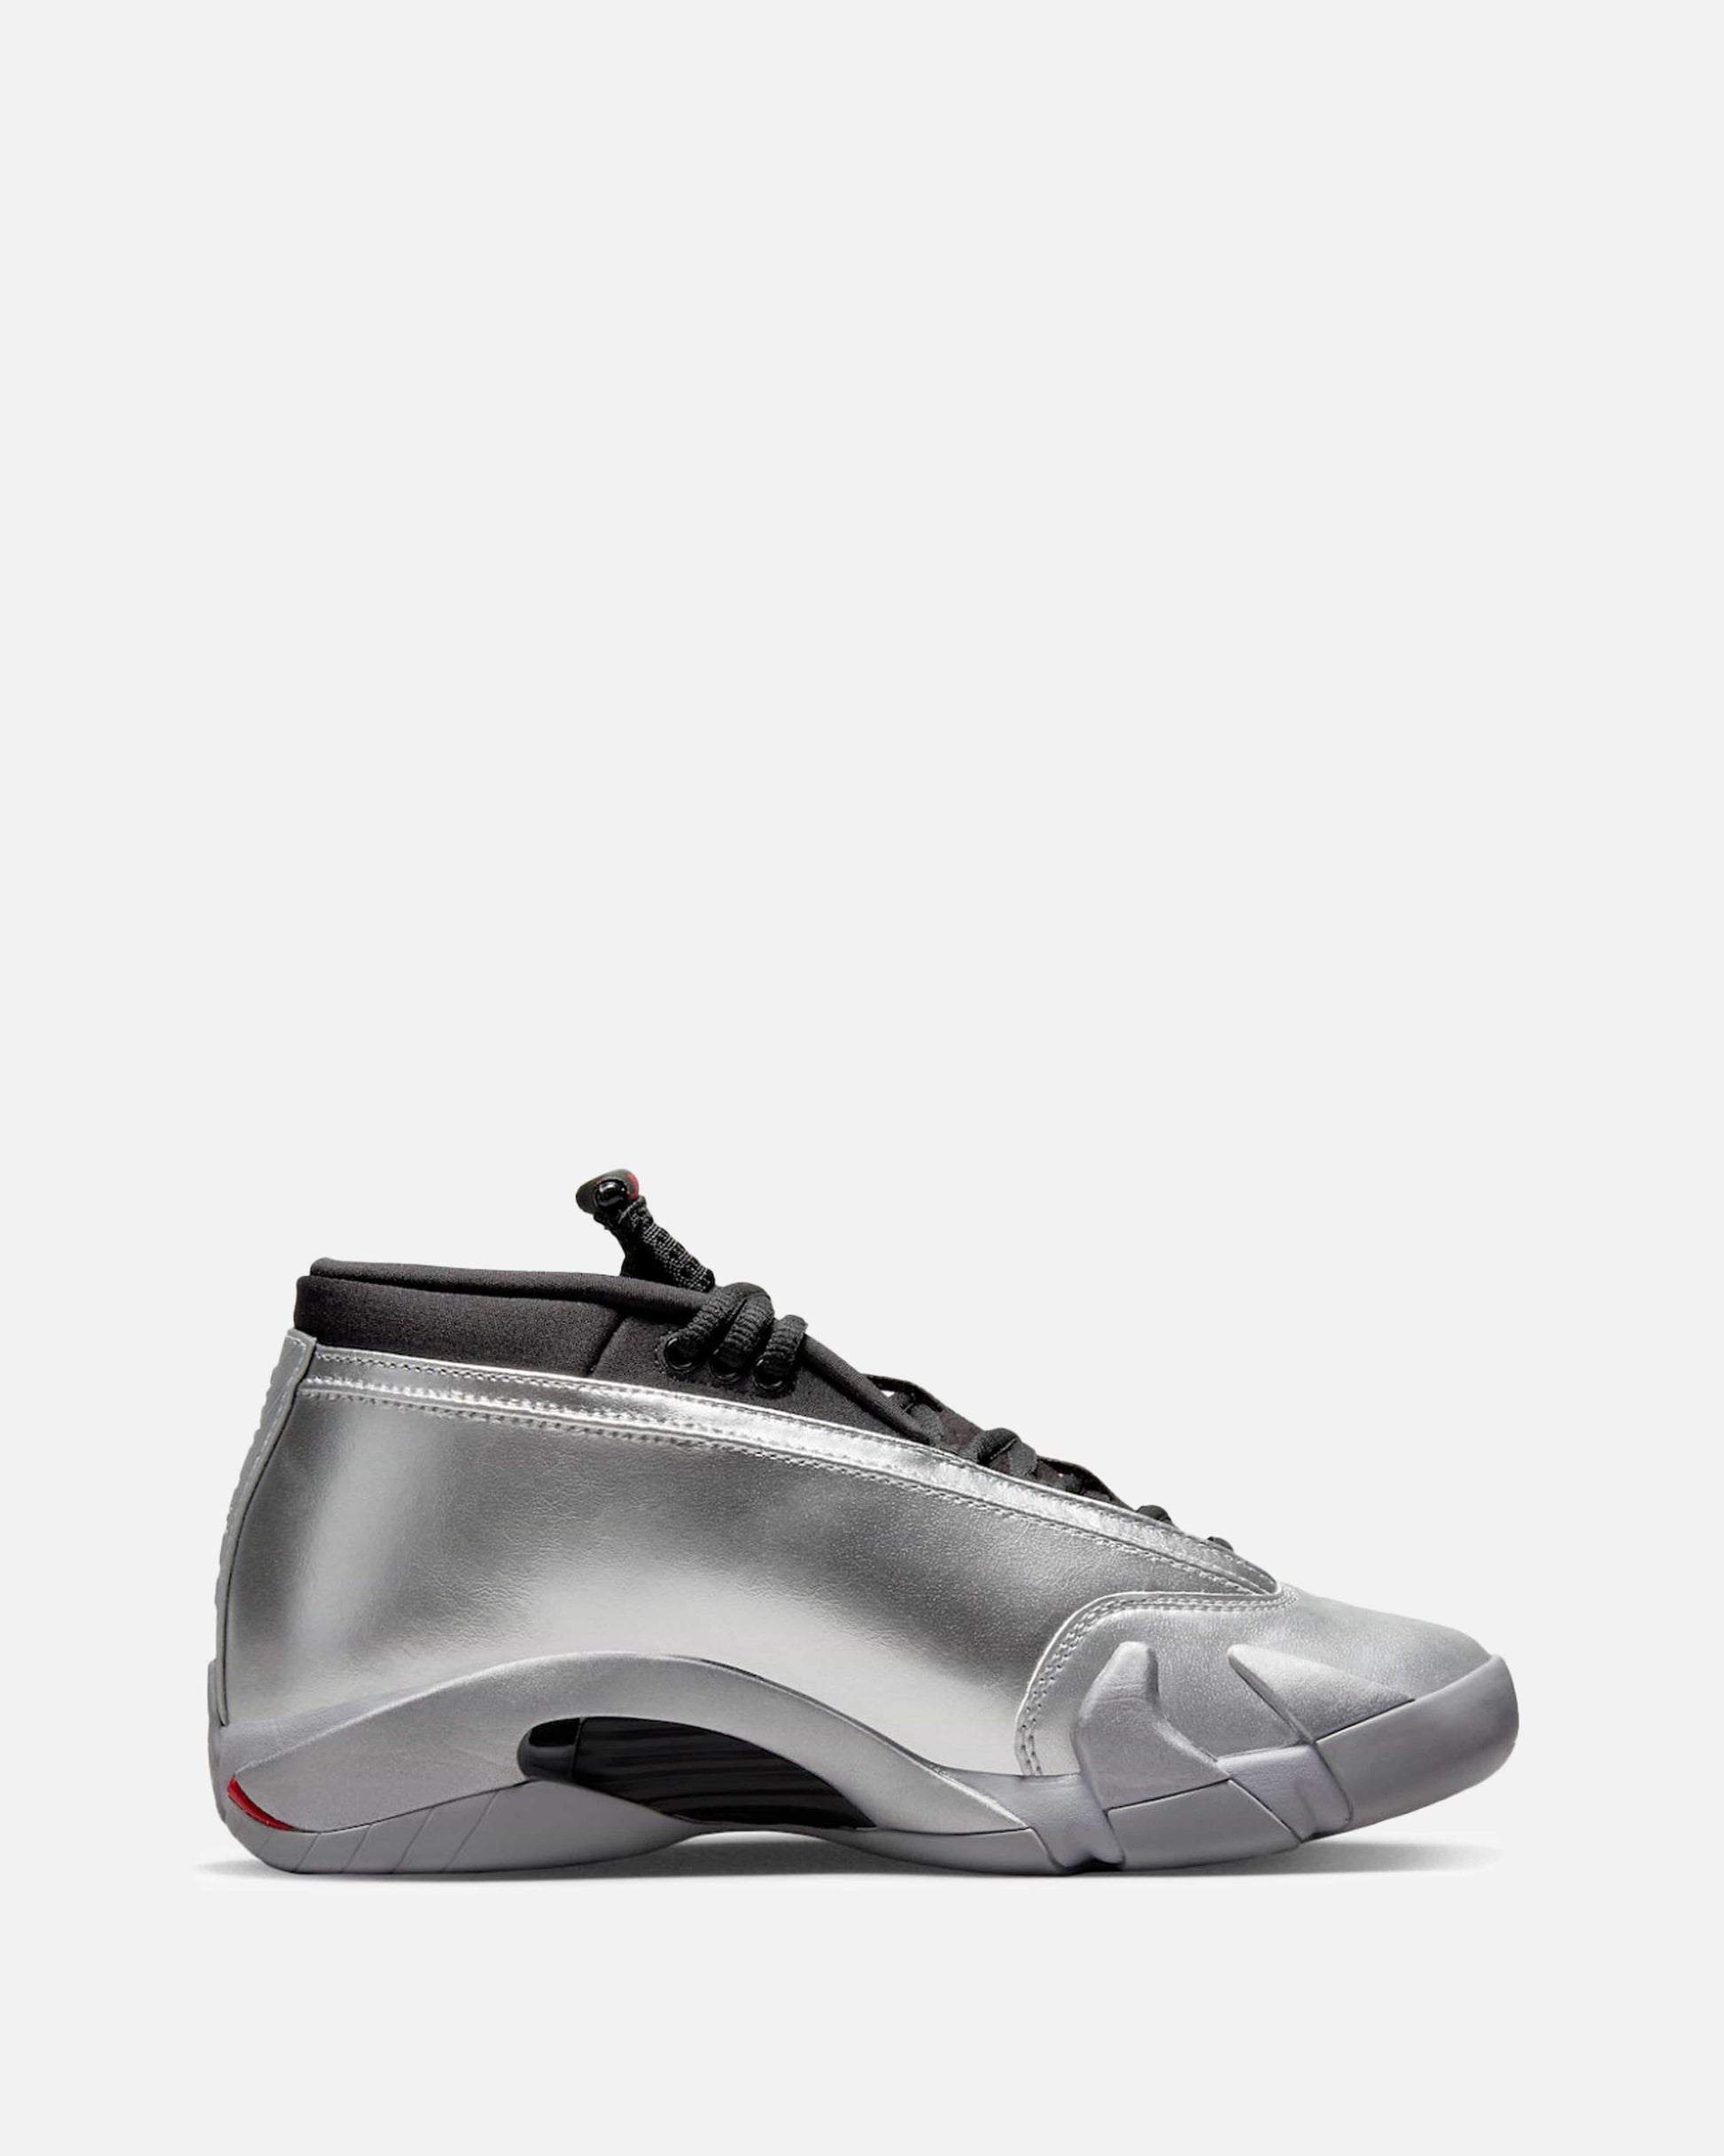 JORDAN Womens Sneakers Women's Air Jordan 14 'Metallic Silver'